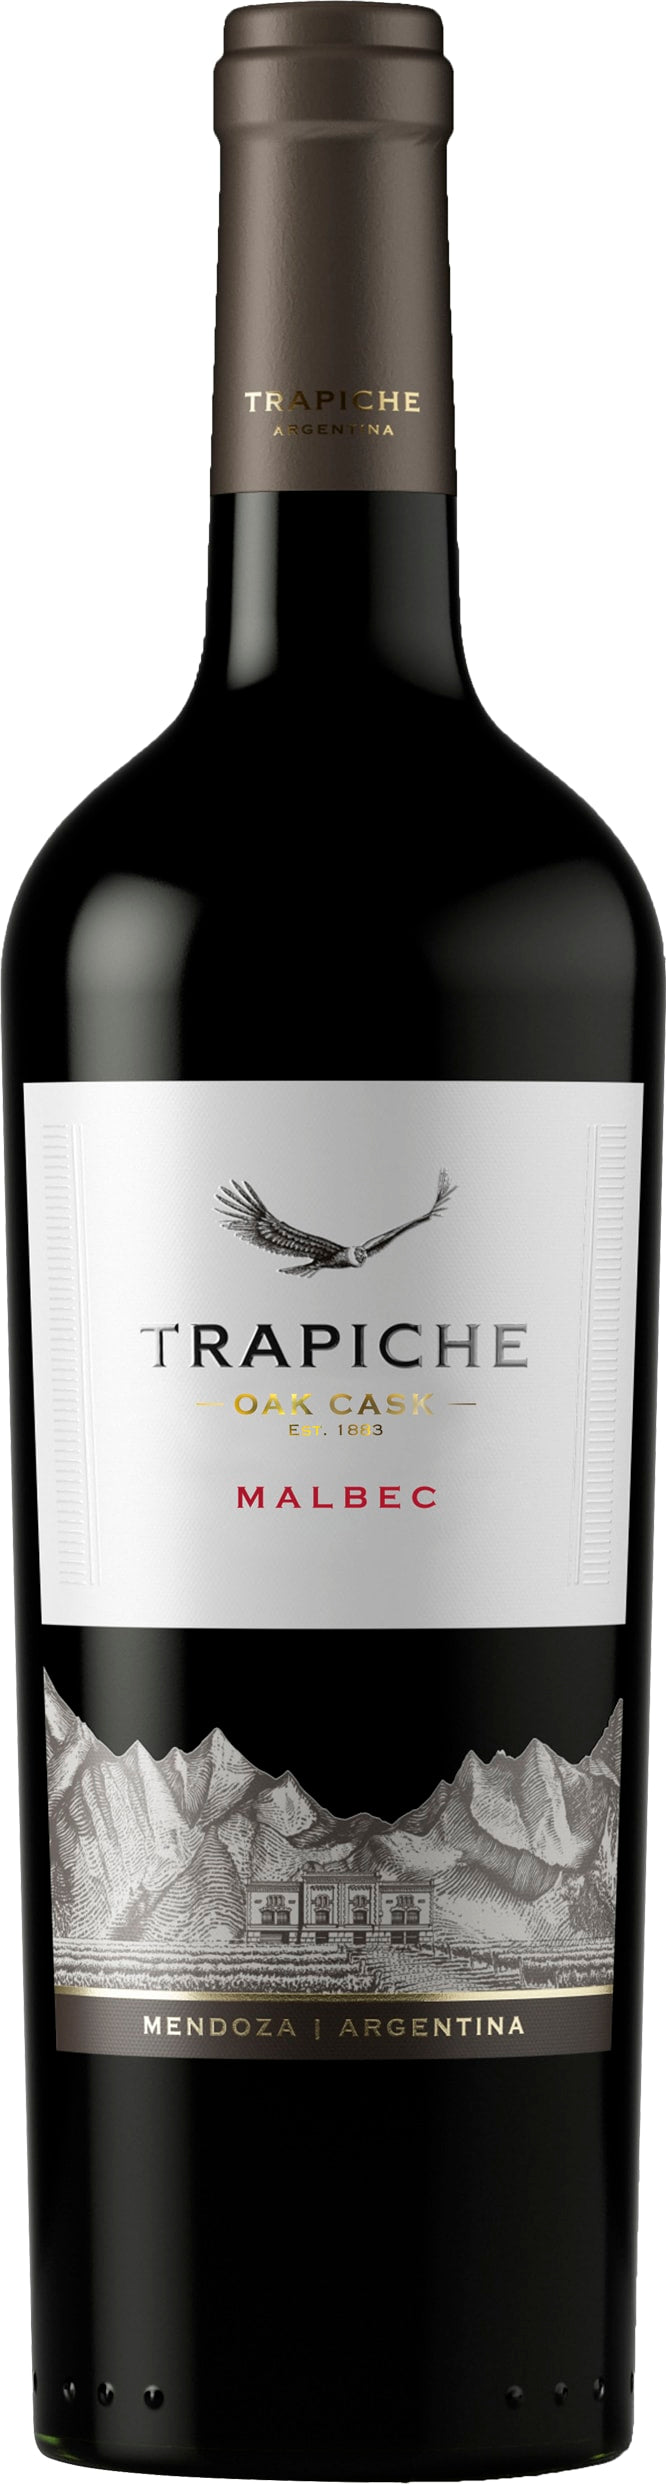 Malbec Reserve 22 Trapiche 75cl - Buy Trapiche Wines from GREAT WINES DIRECT wine shop